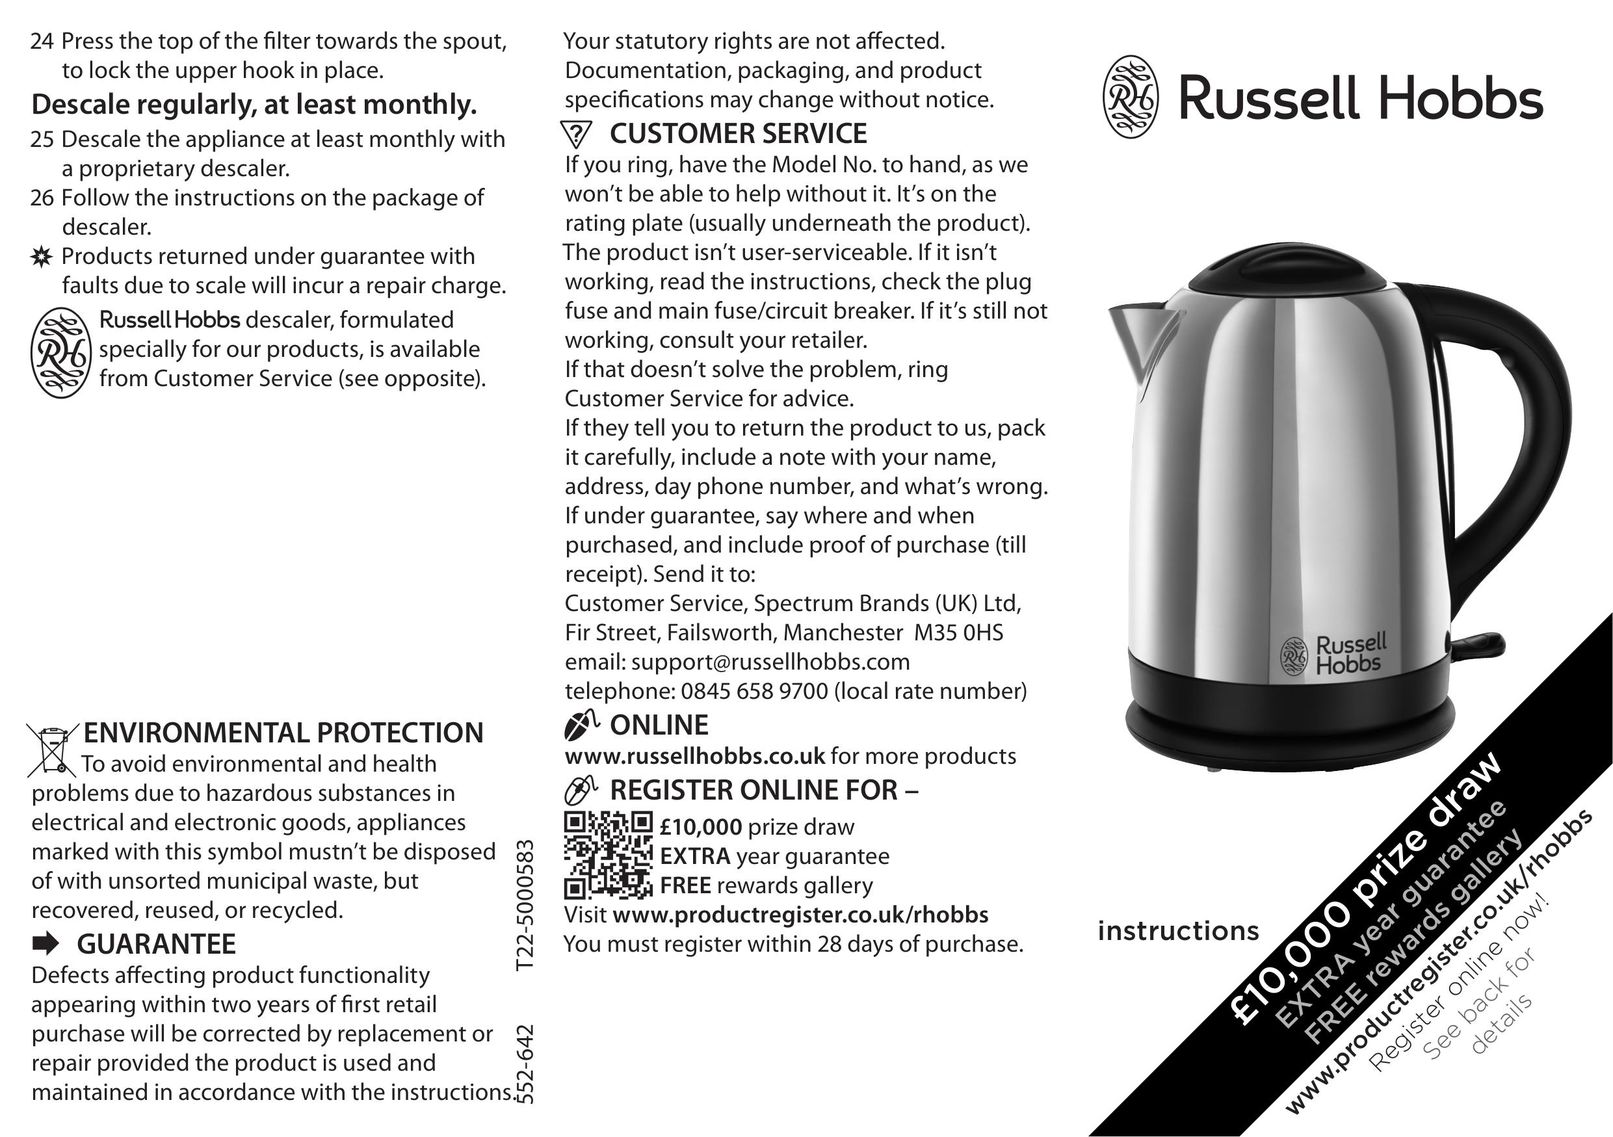 Russell Hobbs T22-5000583 Hot Beverage Maker User Manual